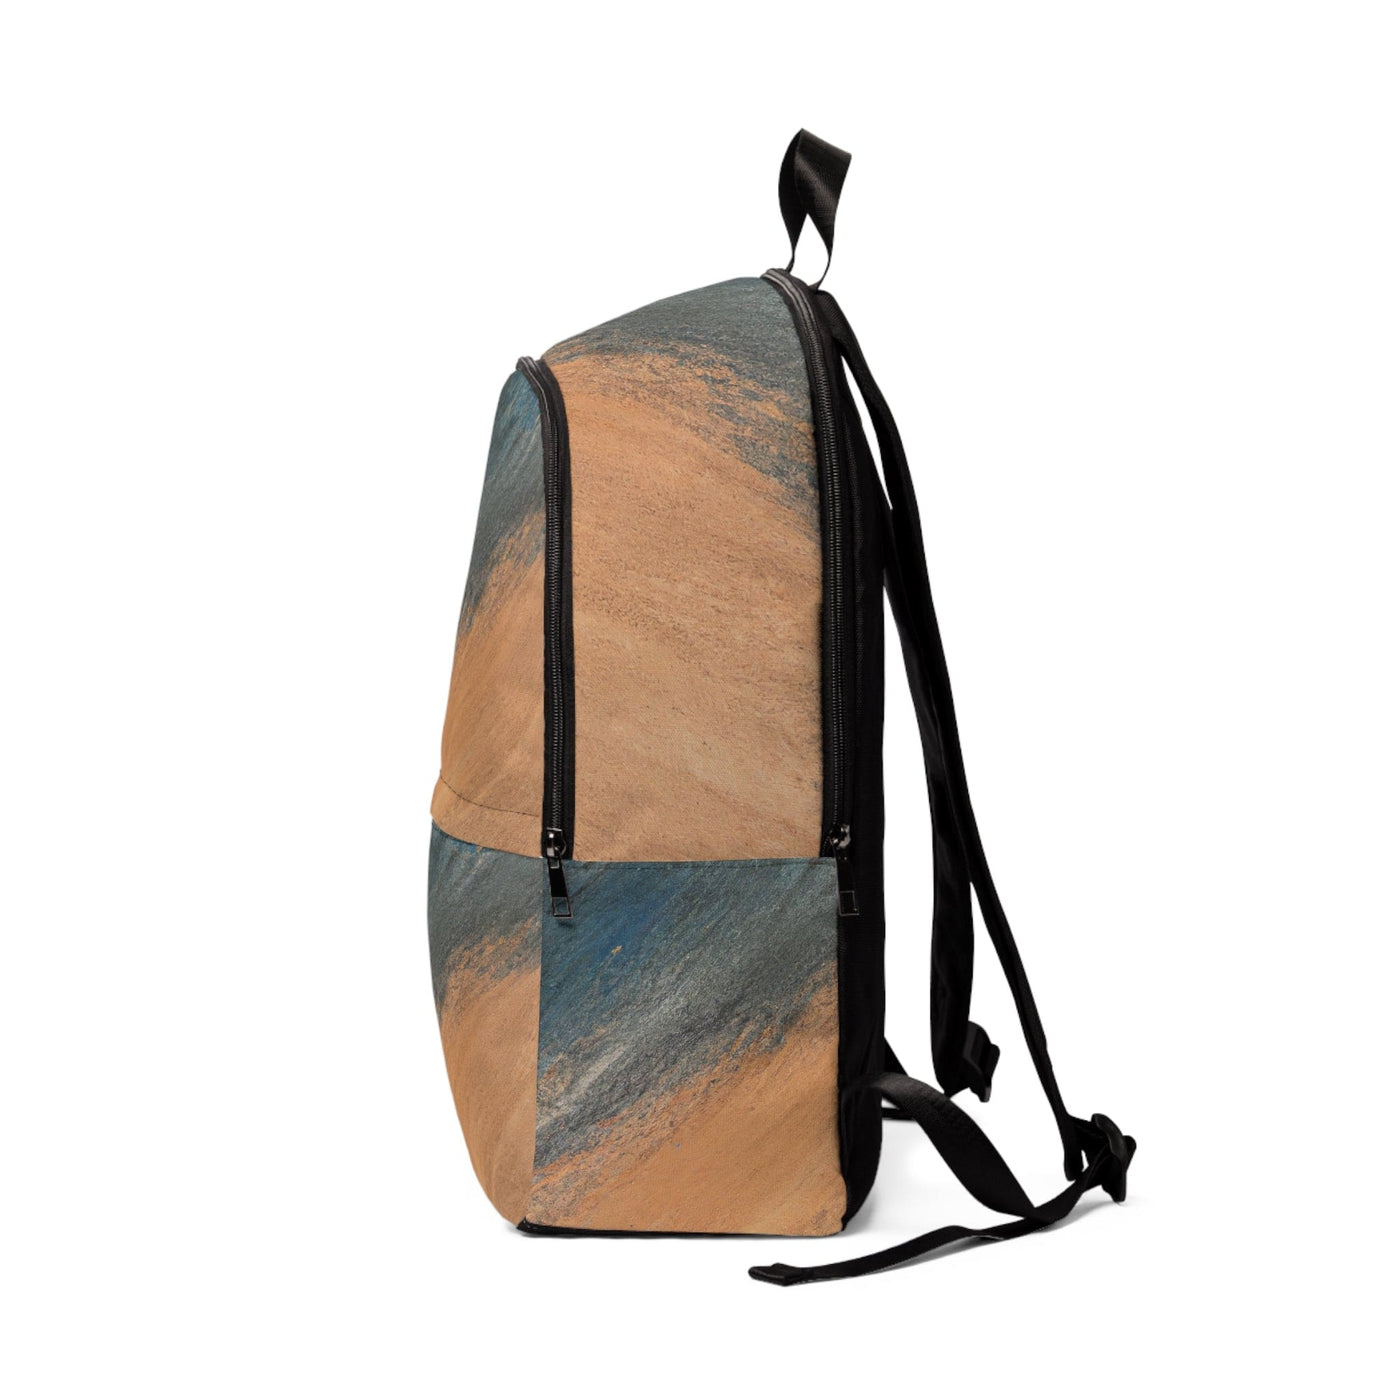 Fashion Backpack Waterproof Blue Orange Abstract Pattern - Bags